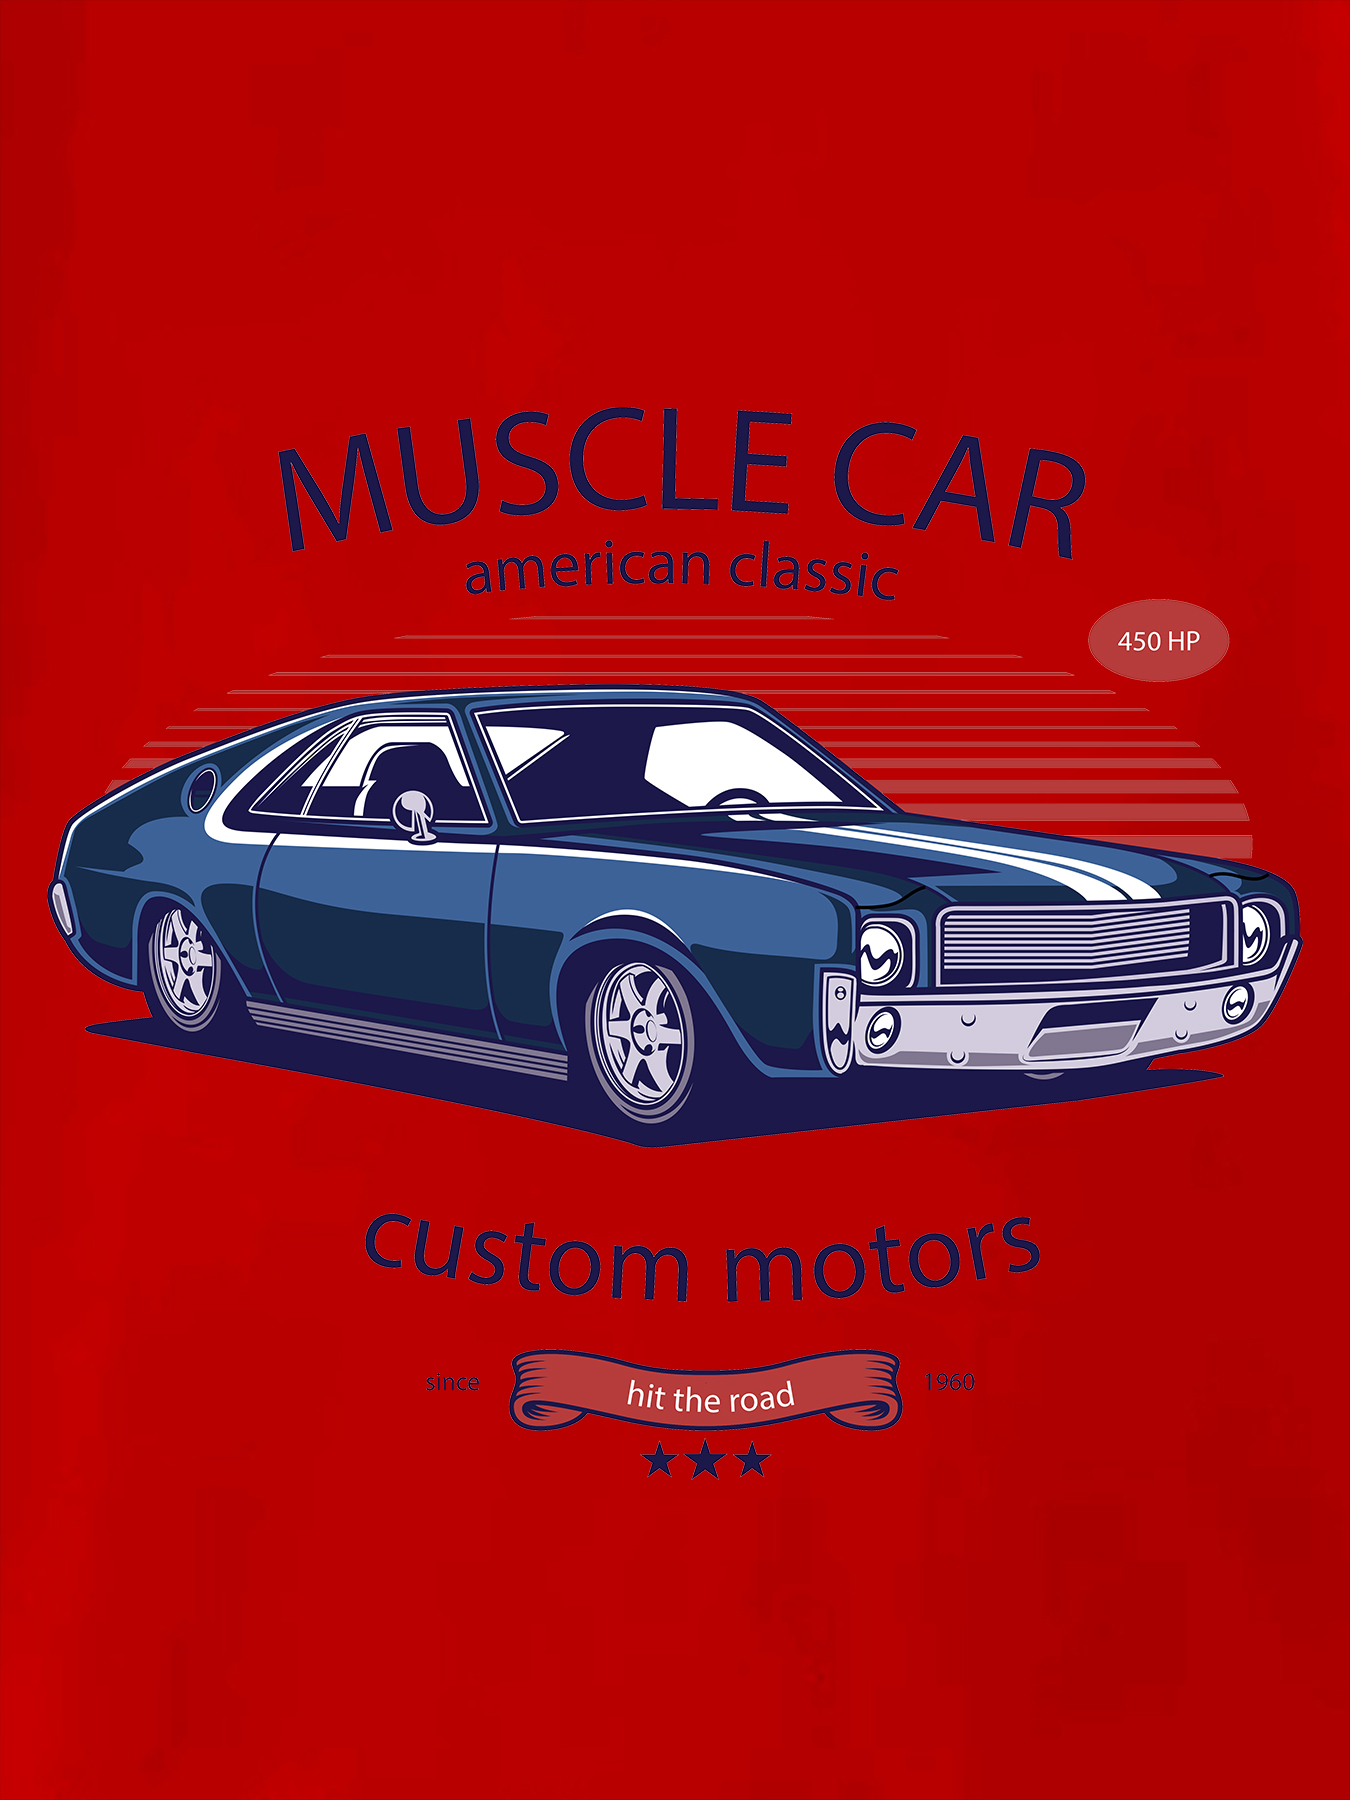 Classic Red Muscle Car Print Hoodie Kids Casual Pullover - Temu